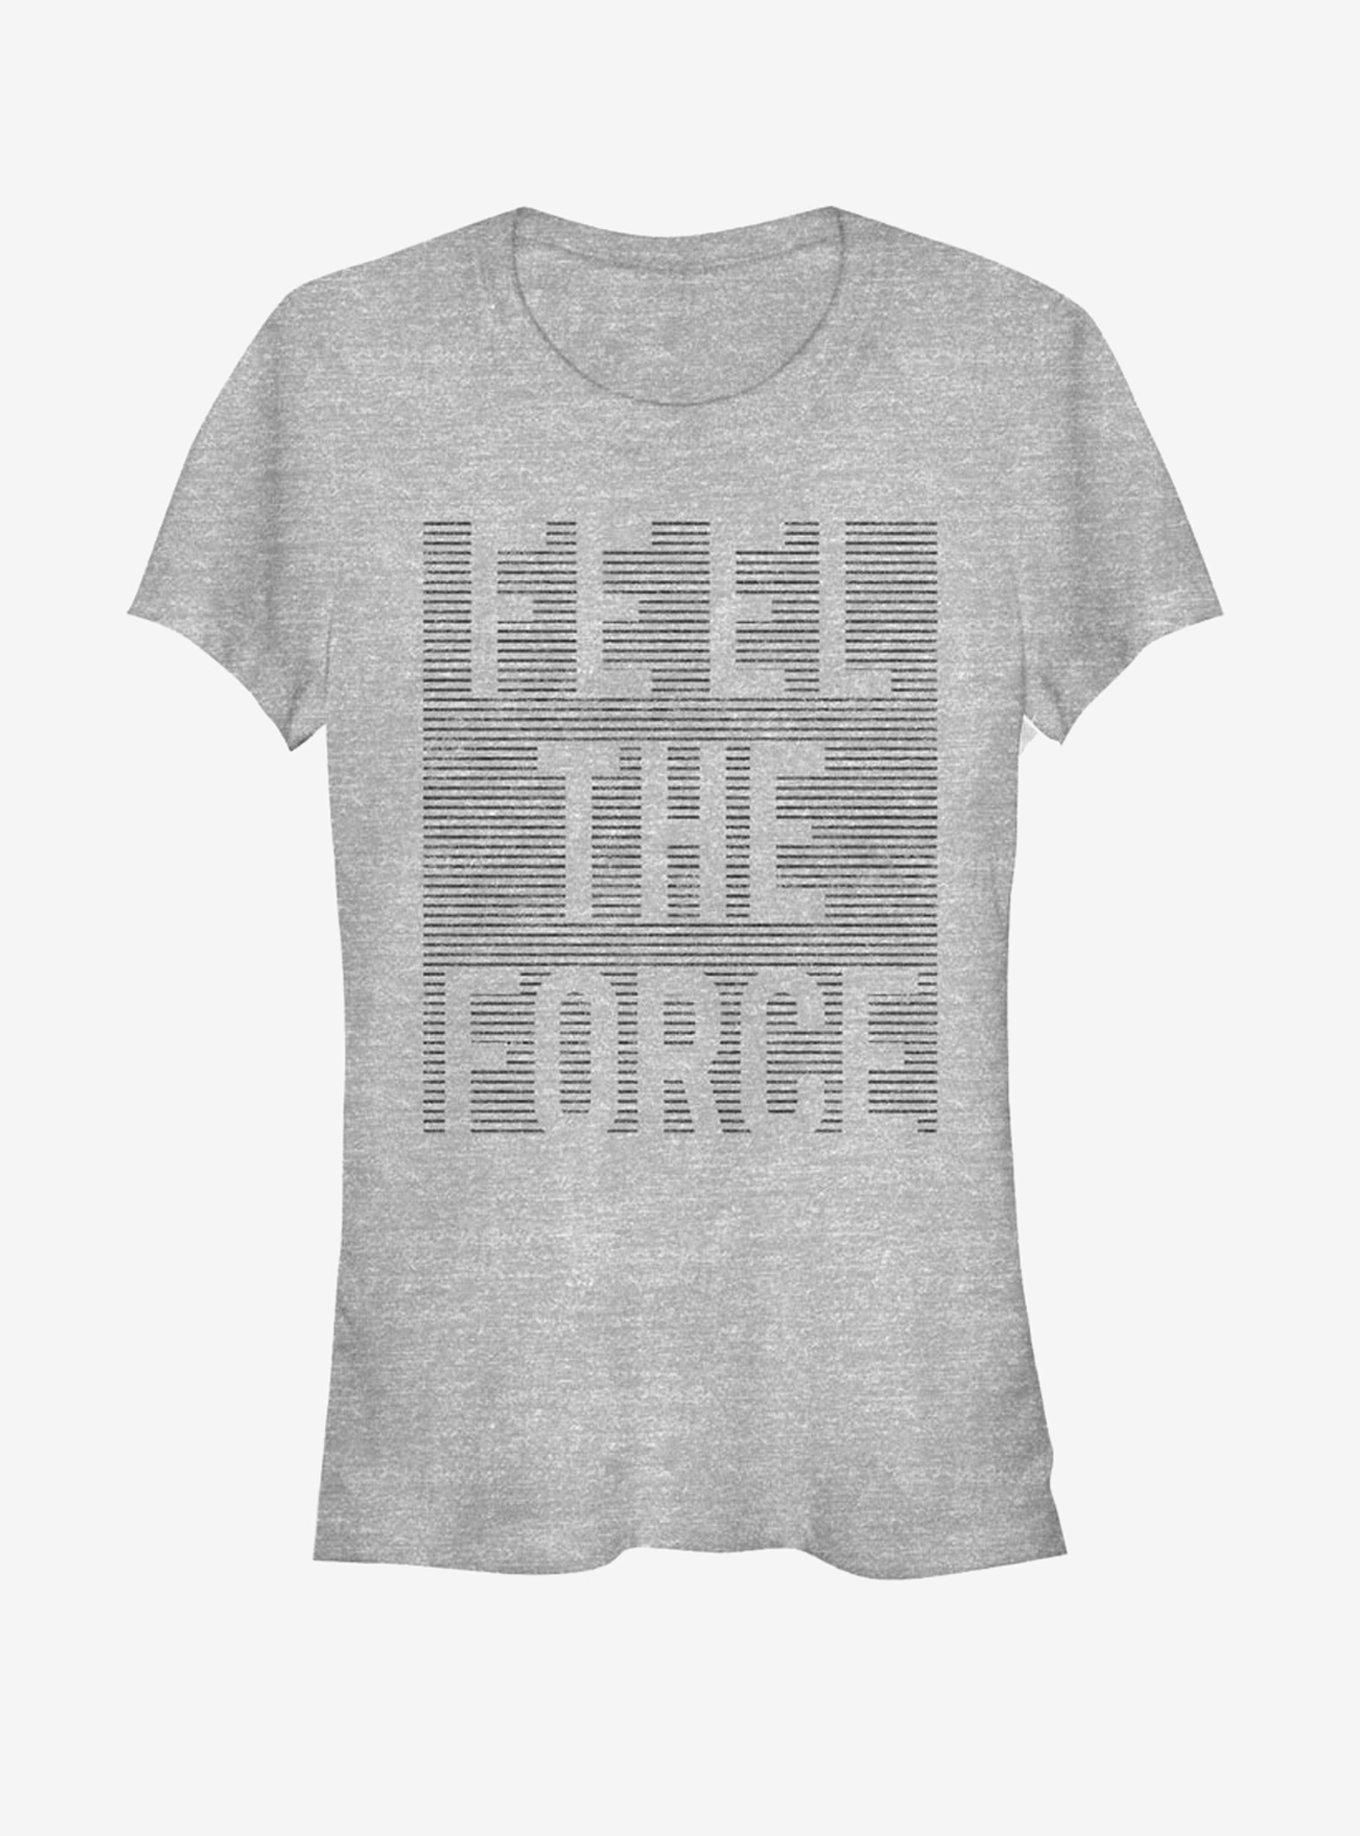 Star Wars Feel Force Girls T-Shirt